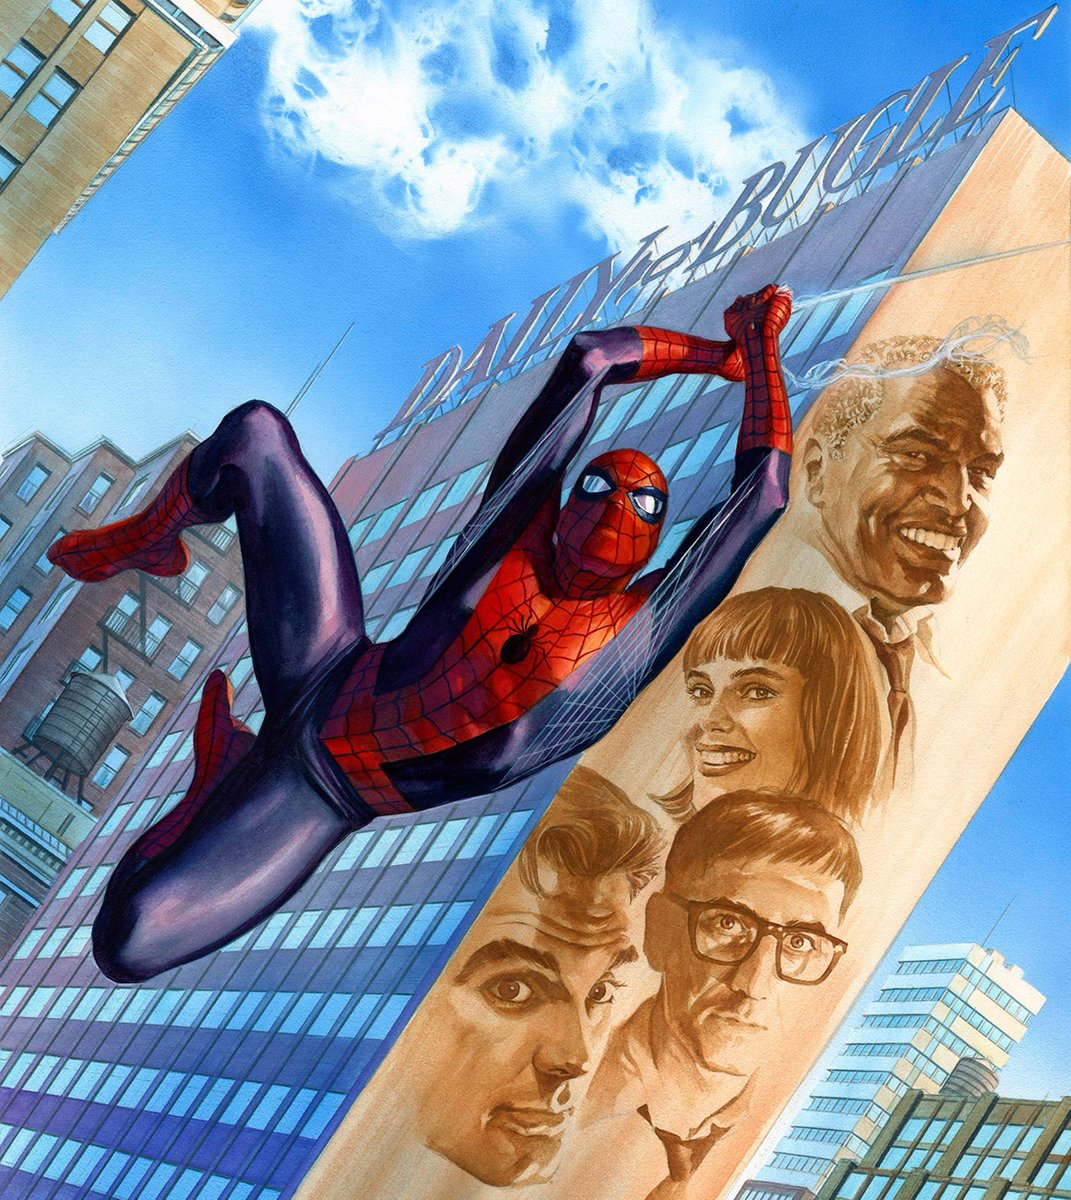 Amazing Spider-Man Annual #4 #spiderman #marvel #marvelcomics #comicart #comicartist #mondaymotivation https://t.co/Qv6c1bbYSm